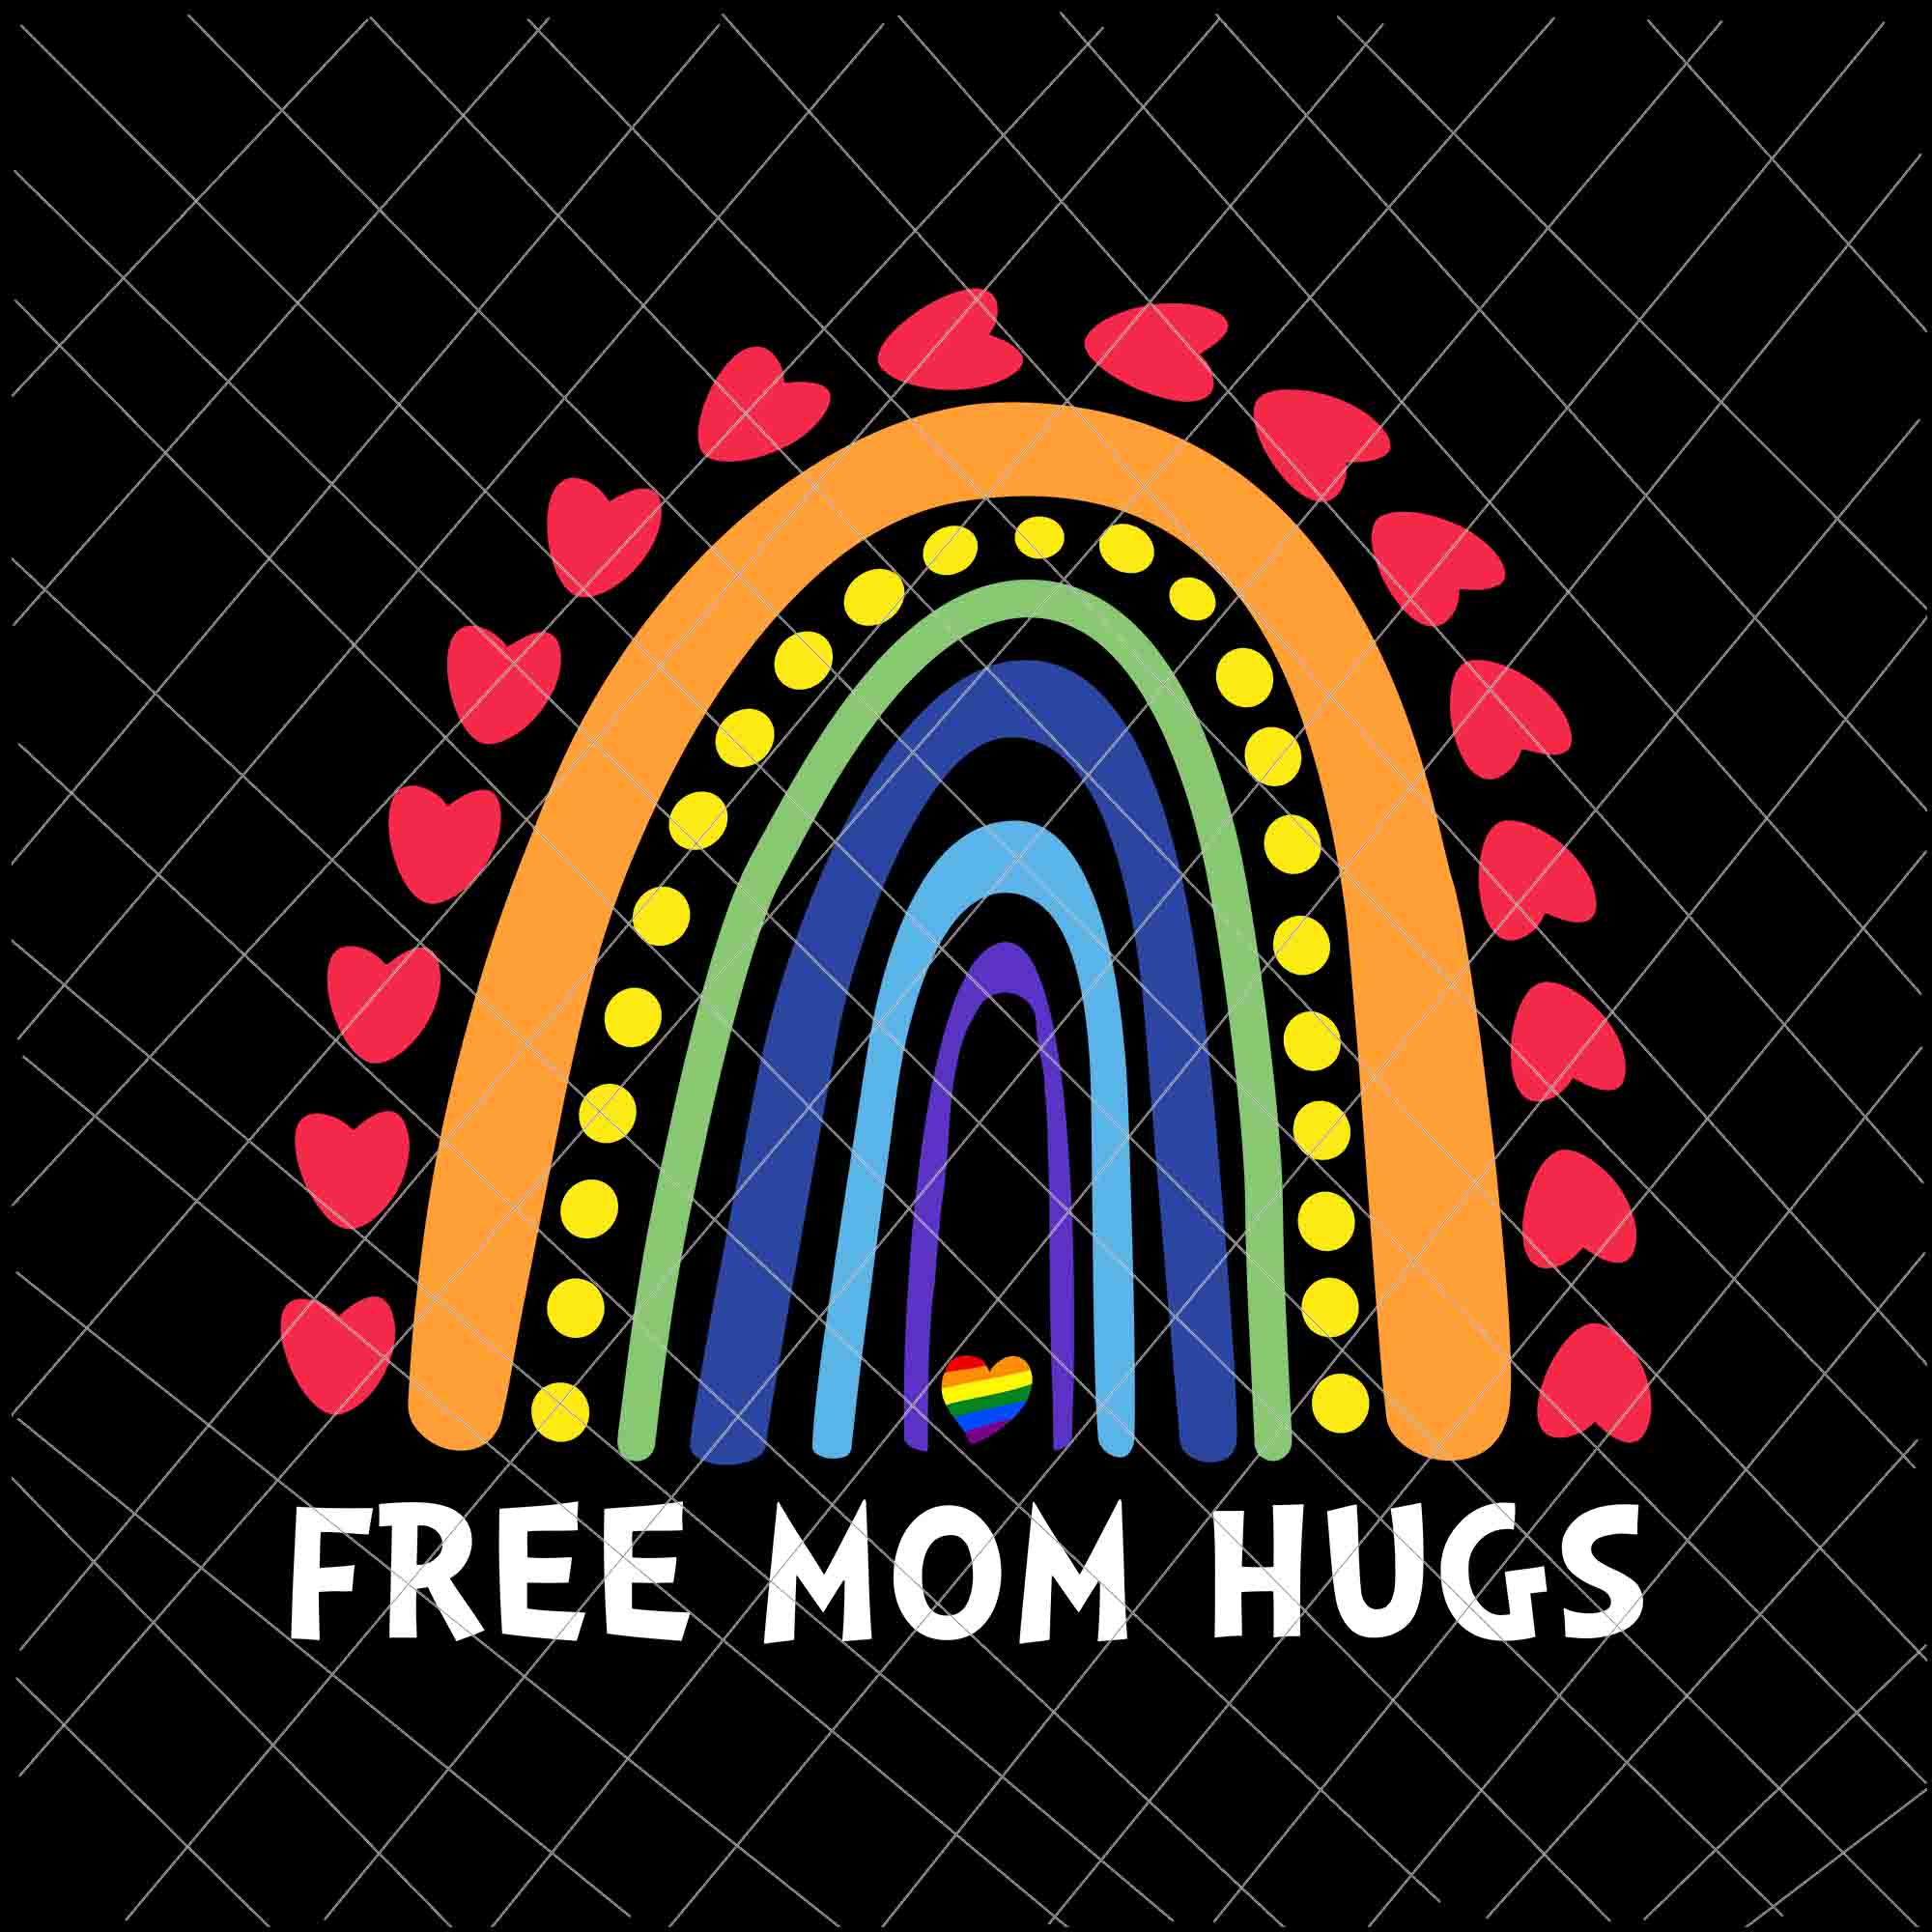 Download Free Mom Hugs Svg Rainbow Heart Gay Pride Lgbt Svg Rainbow Heart Gay Buydesigntshirt